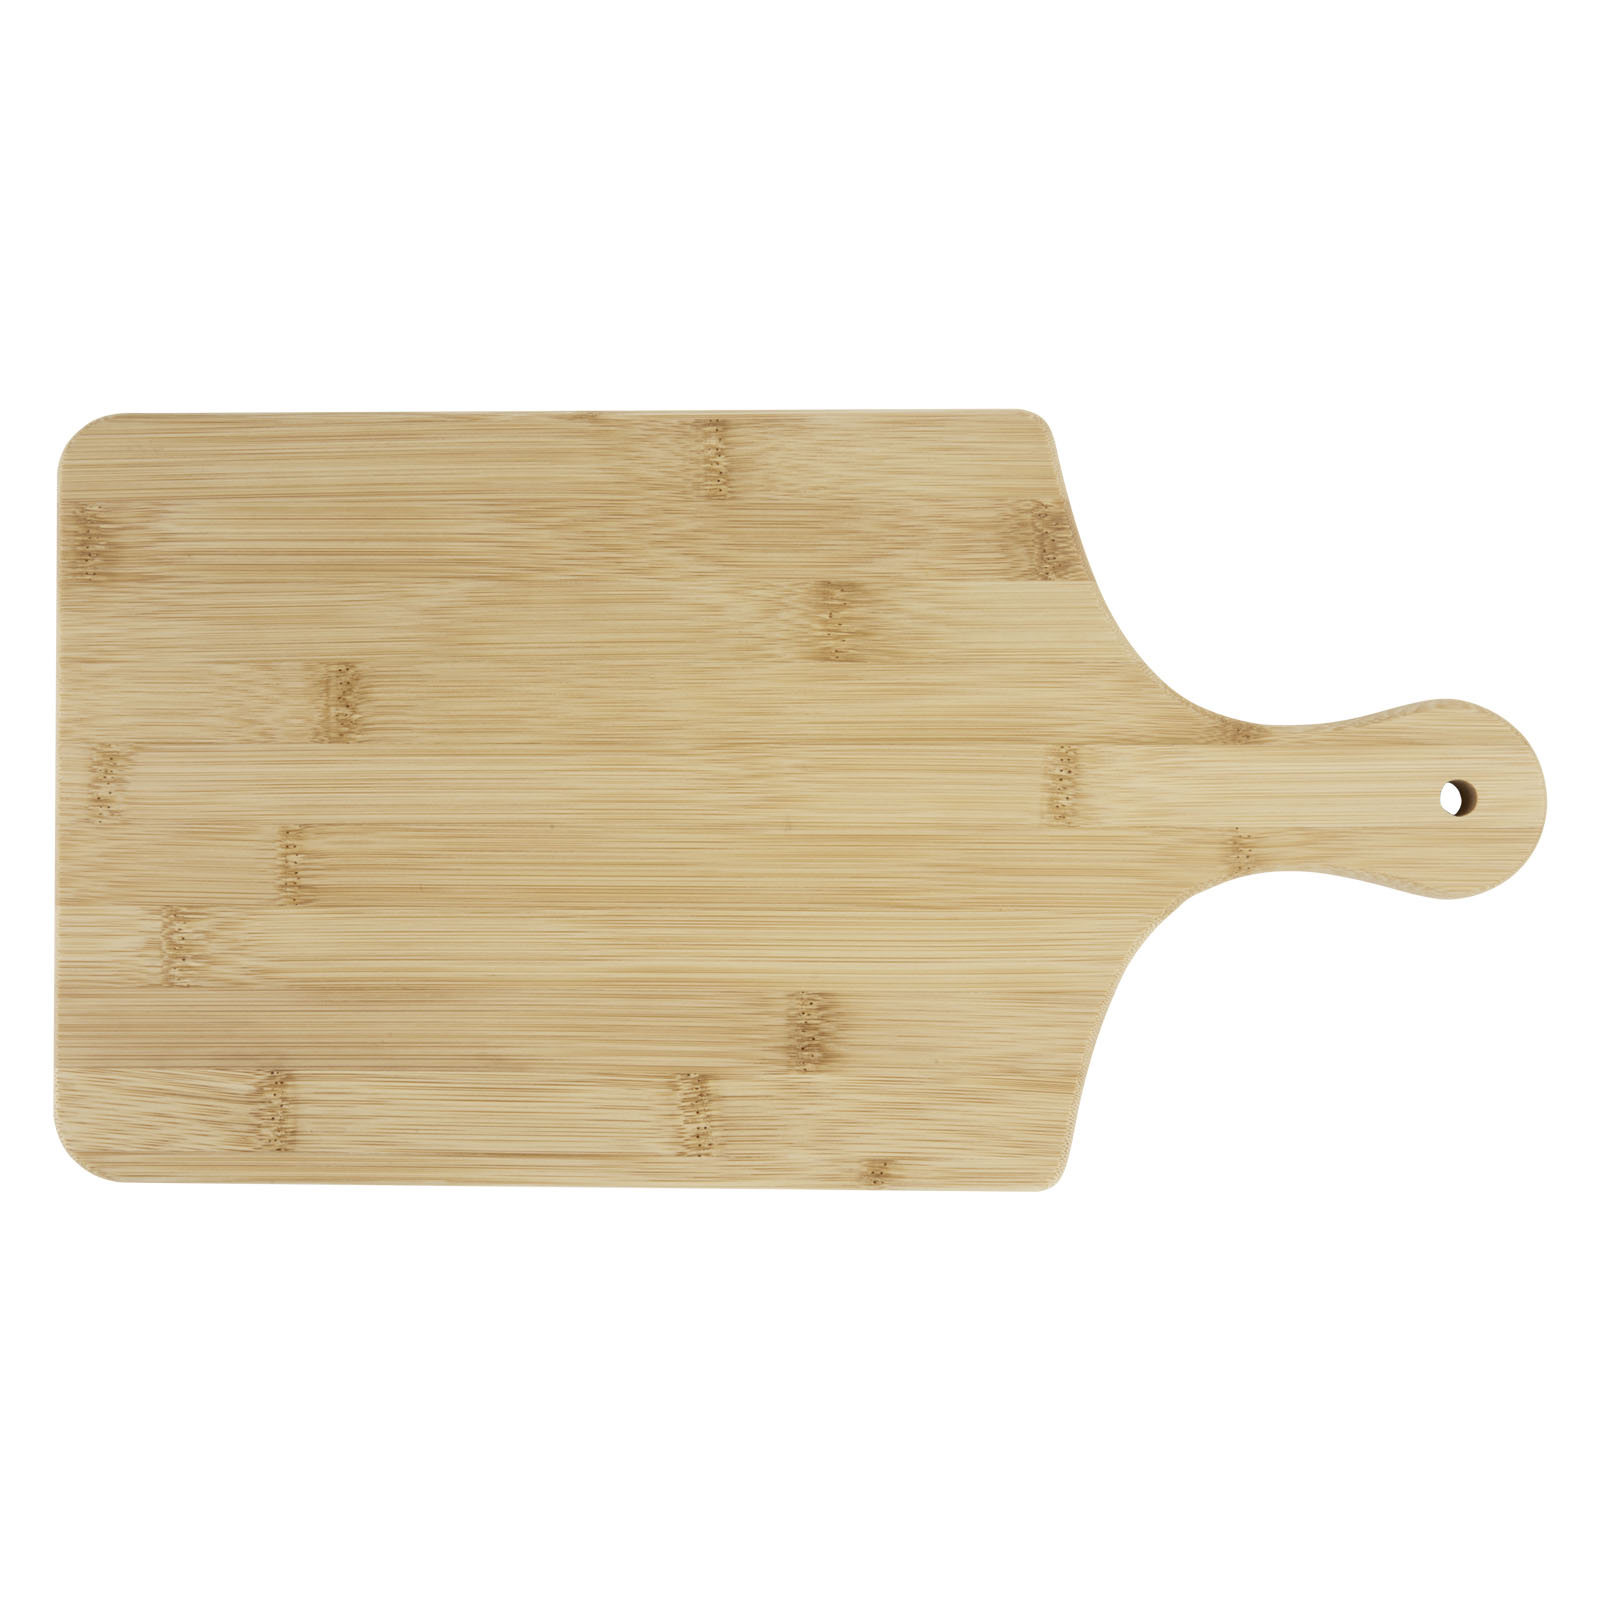 Advertising Cutting Boards - Baron bamboo cutting board - 2